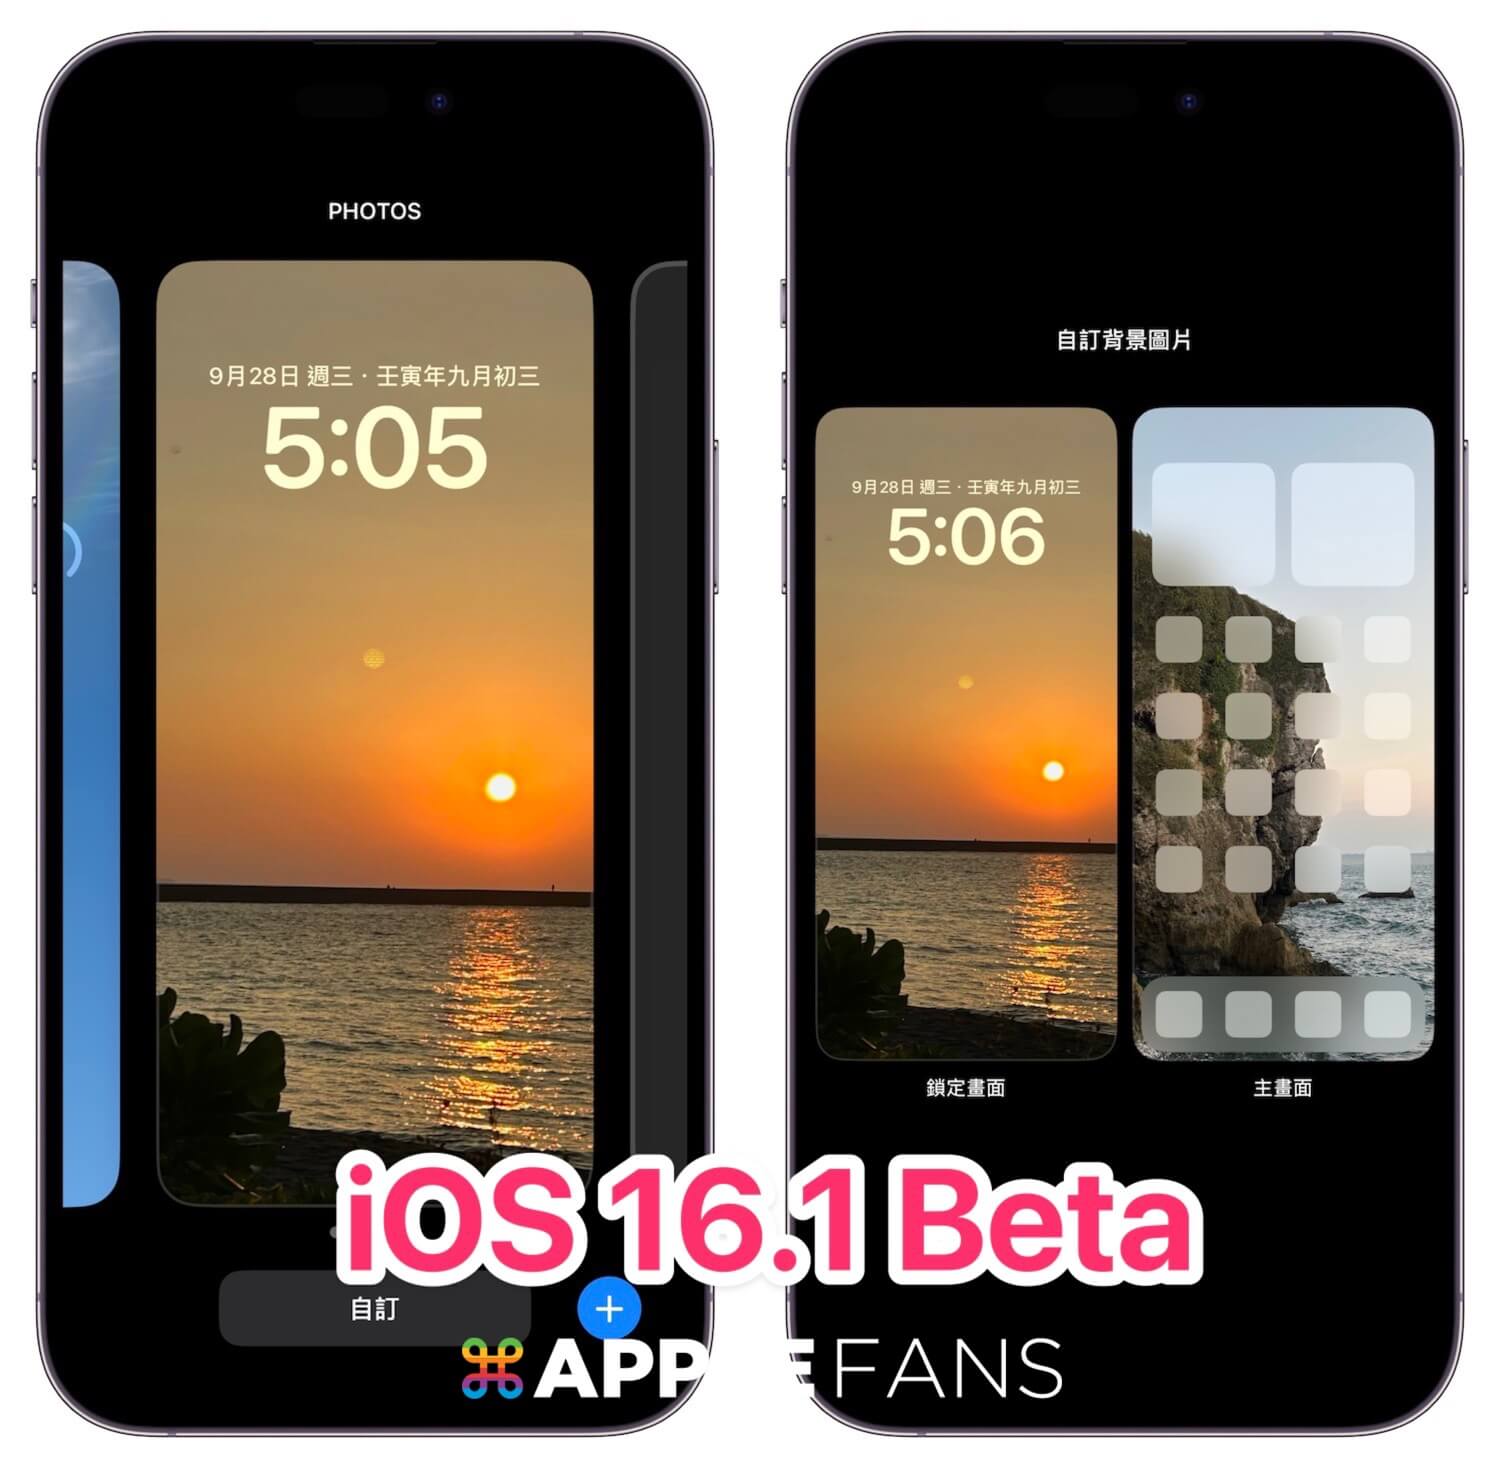 iOS 16.1 Beta 鎖定畫面